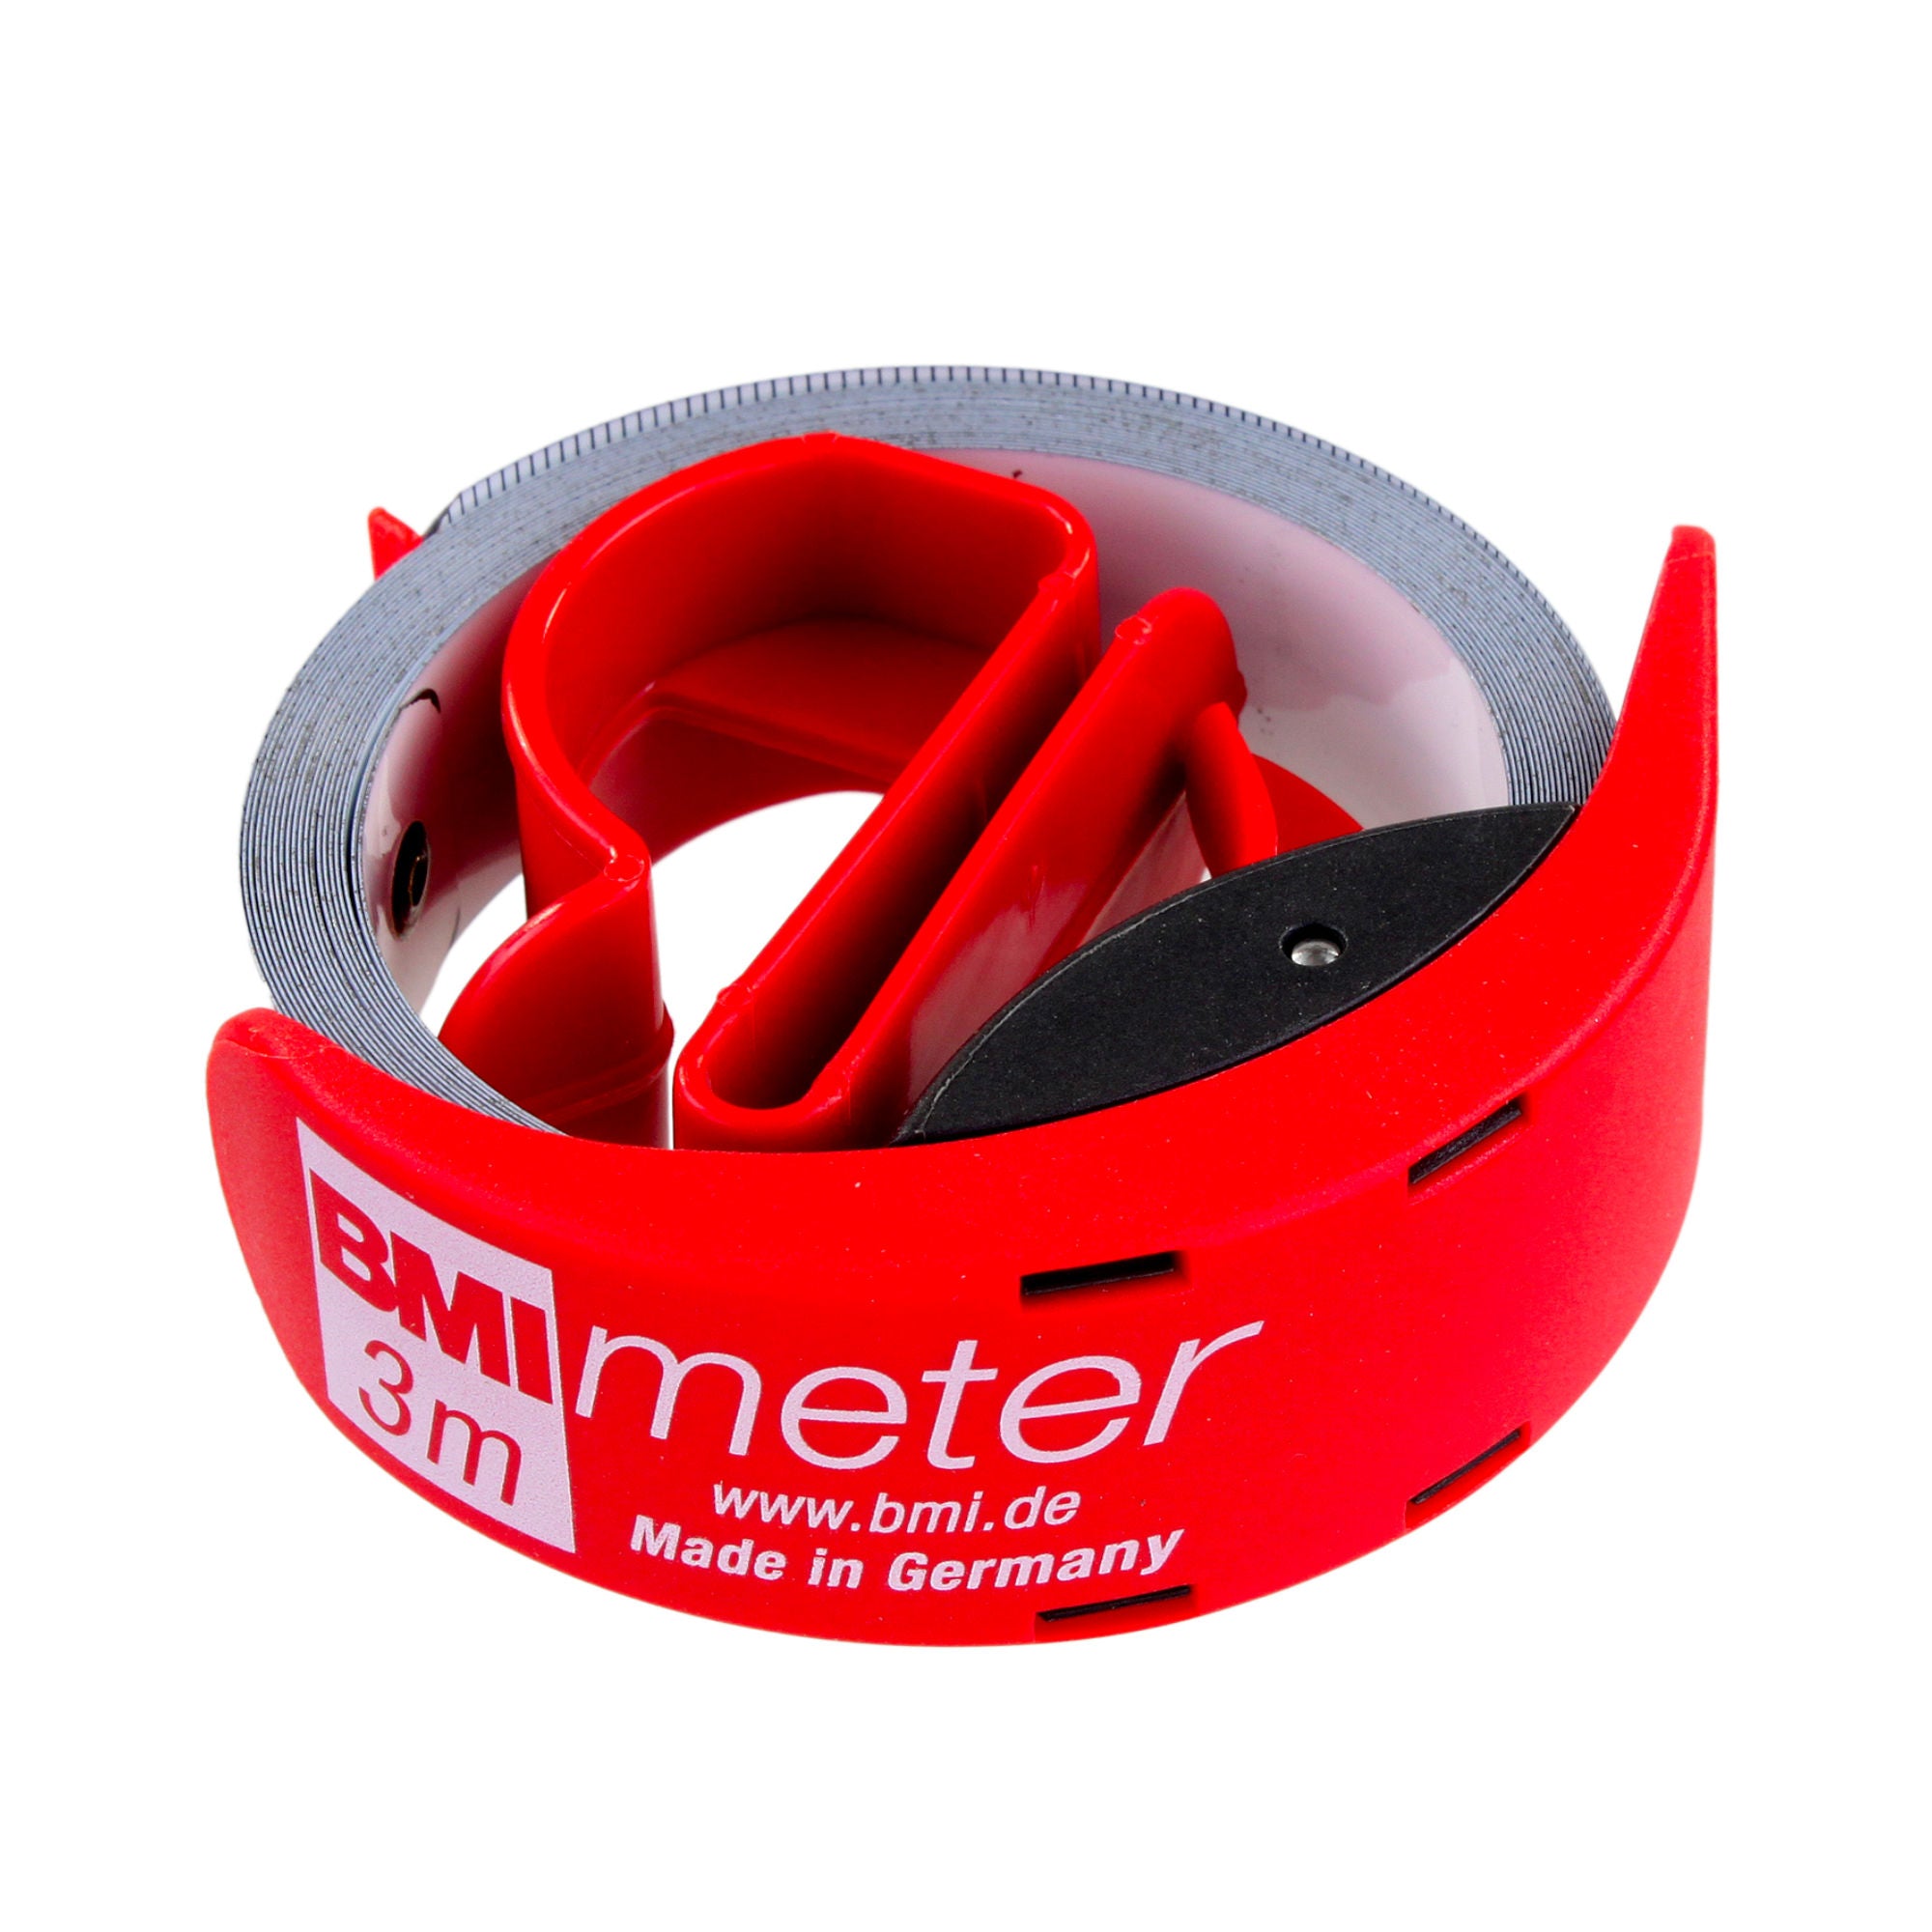 BMI 429241011 Pocket Tape Meter 2m in red, Multicoloured